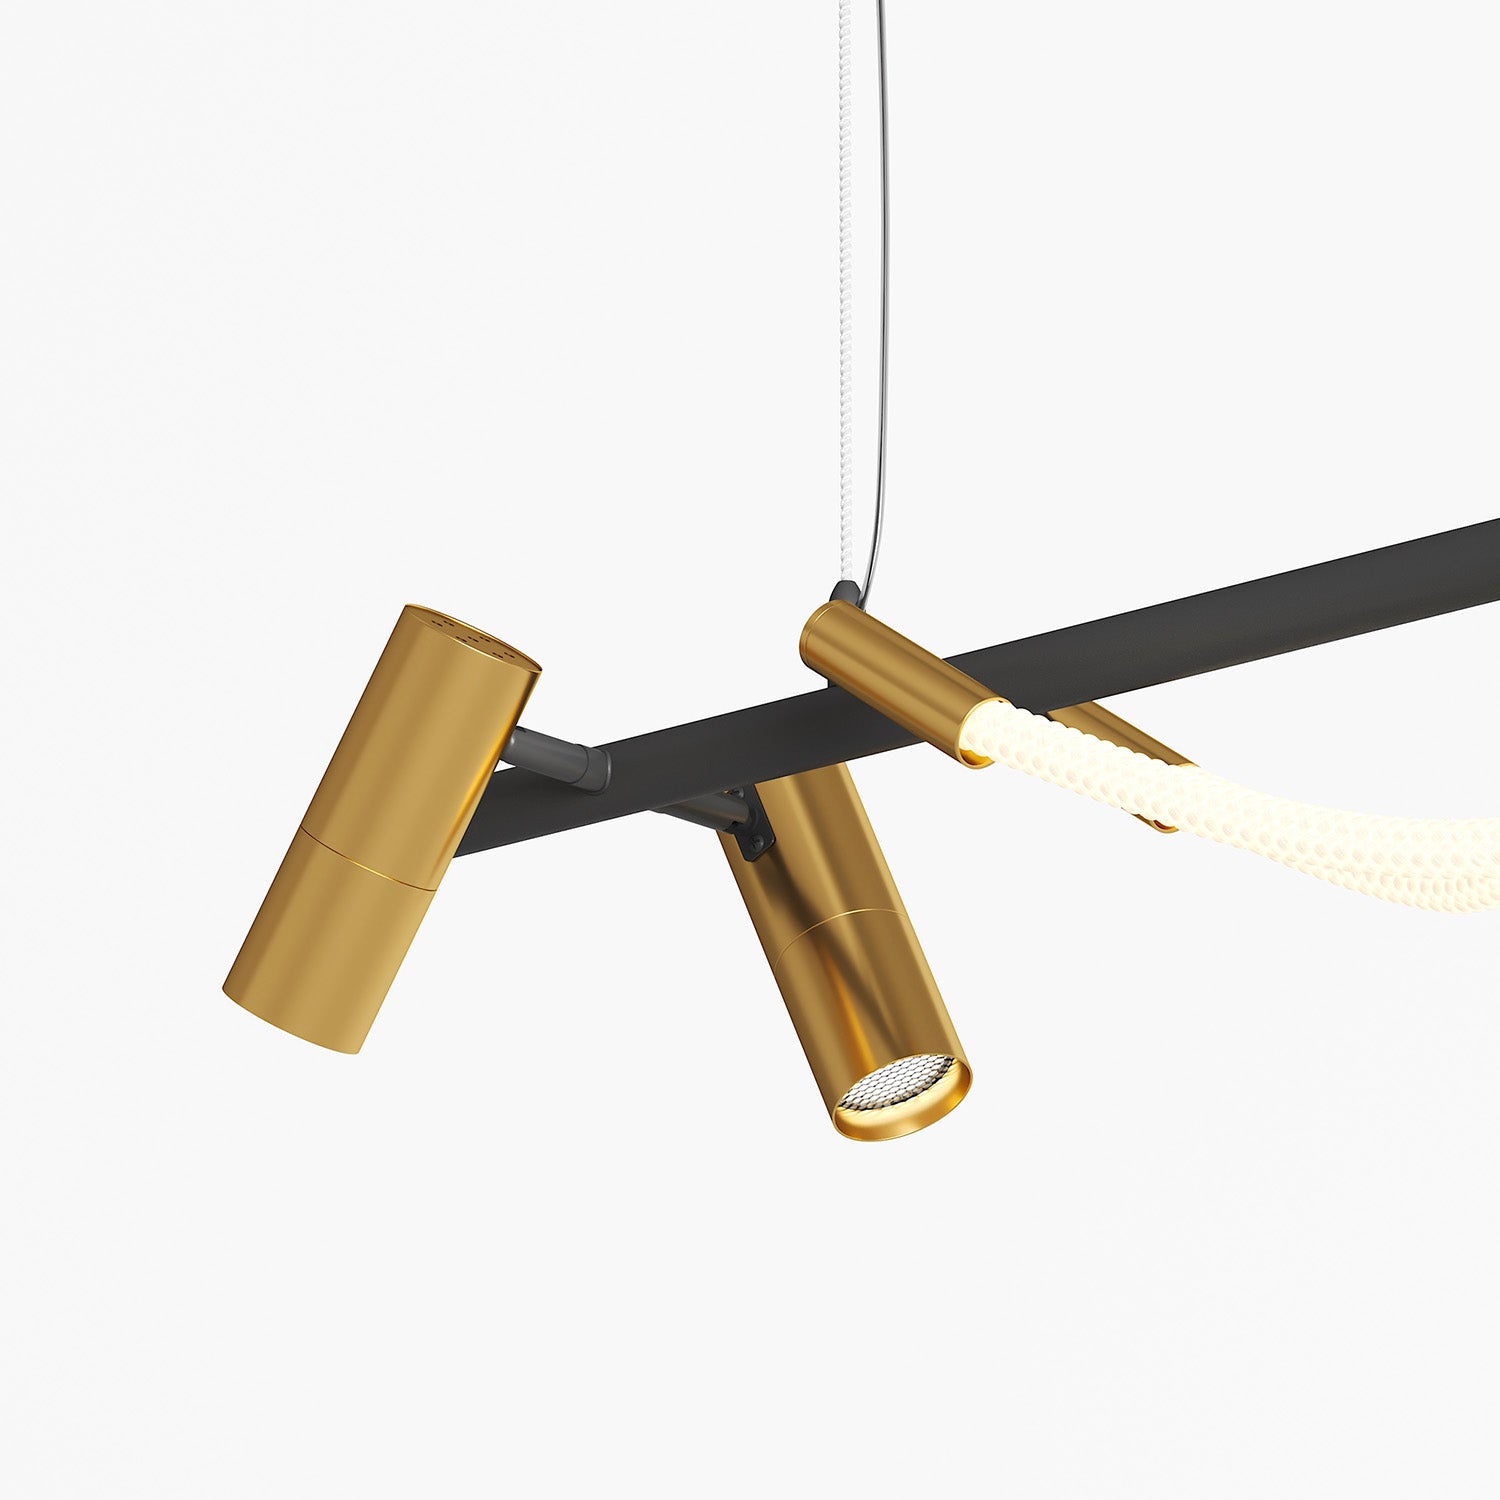 TAU – Integrierte flexible LED-Röhrenaufhängung, schwarz-goldenes Design